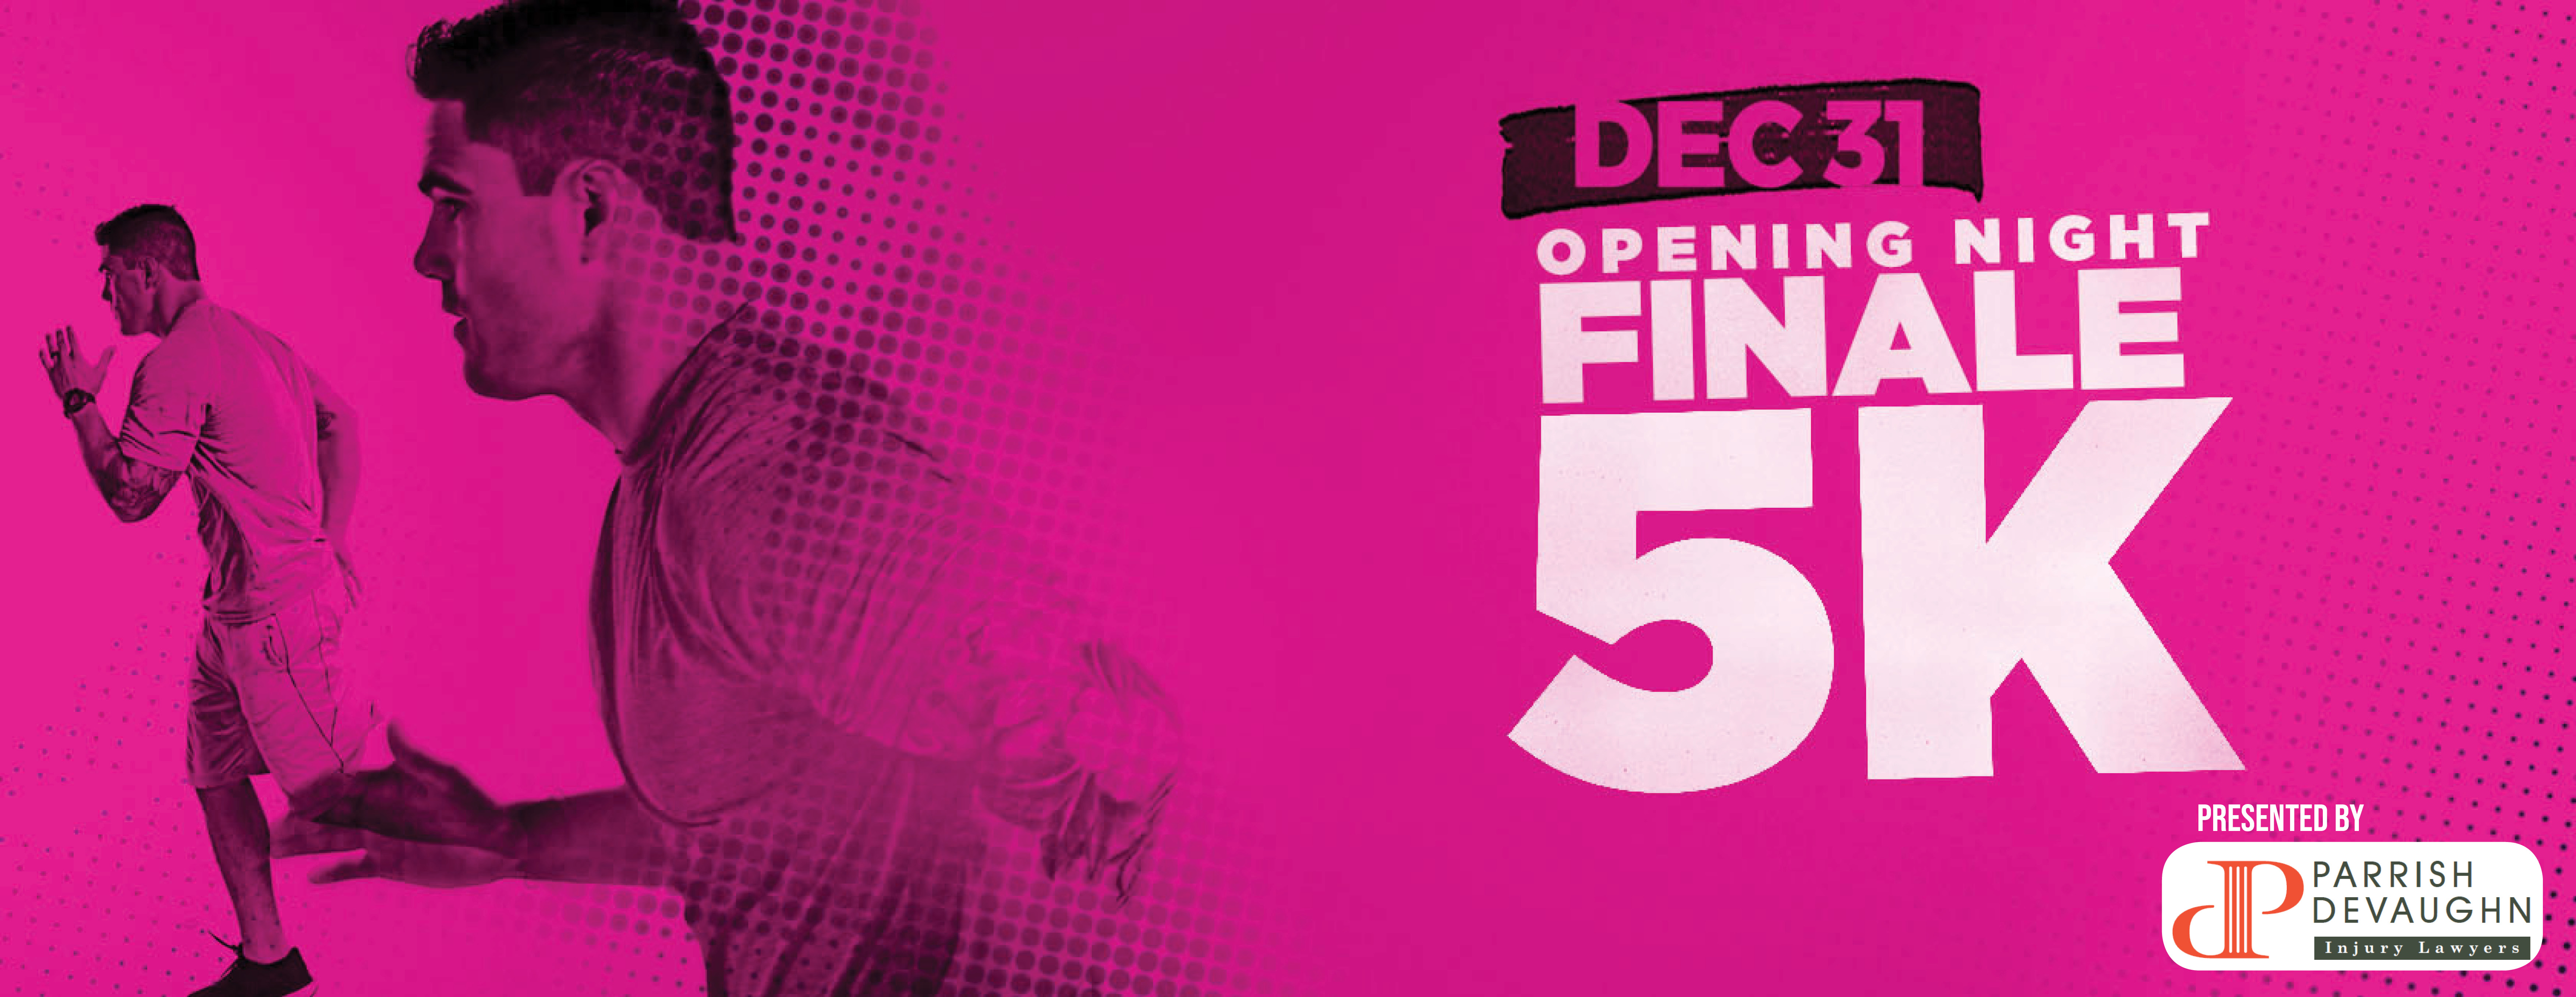 Finale 5K Dec 31 Presented by Parrish Devaughn